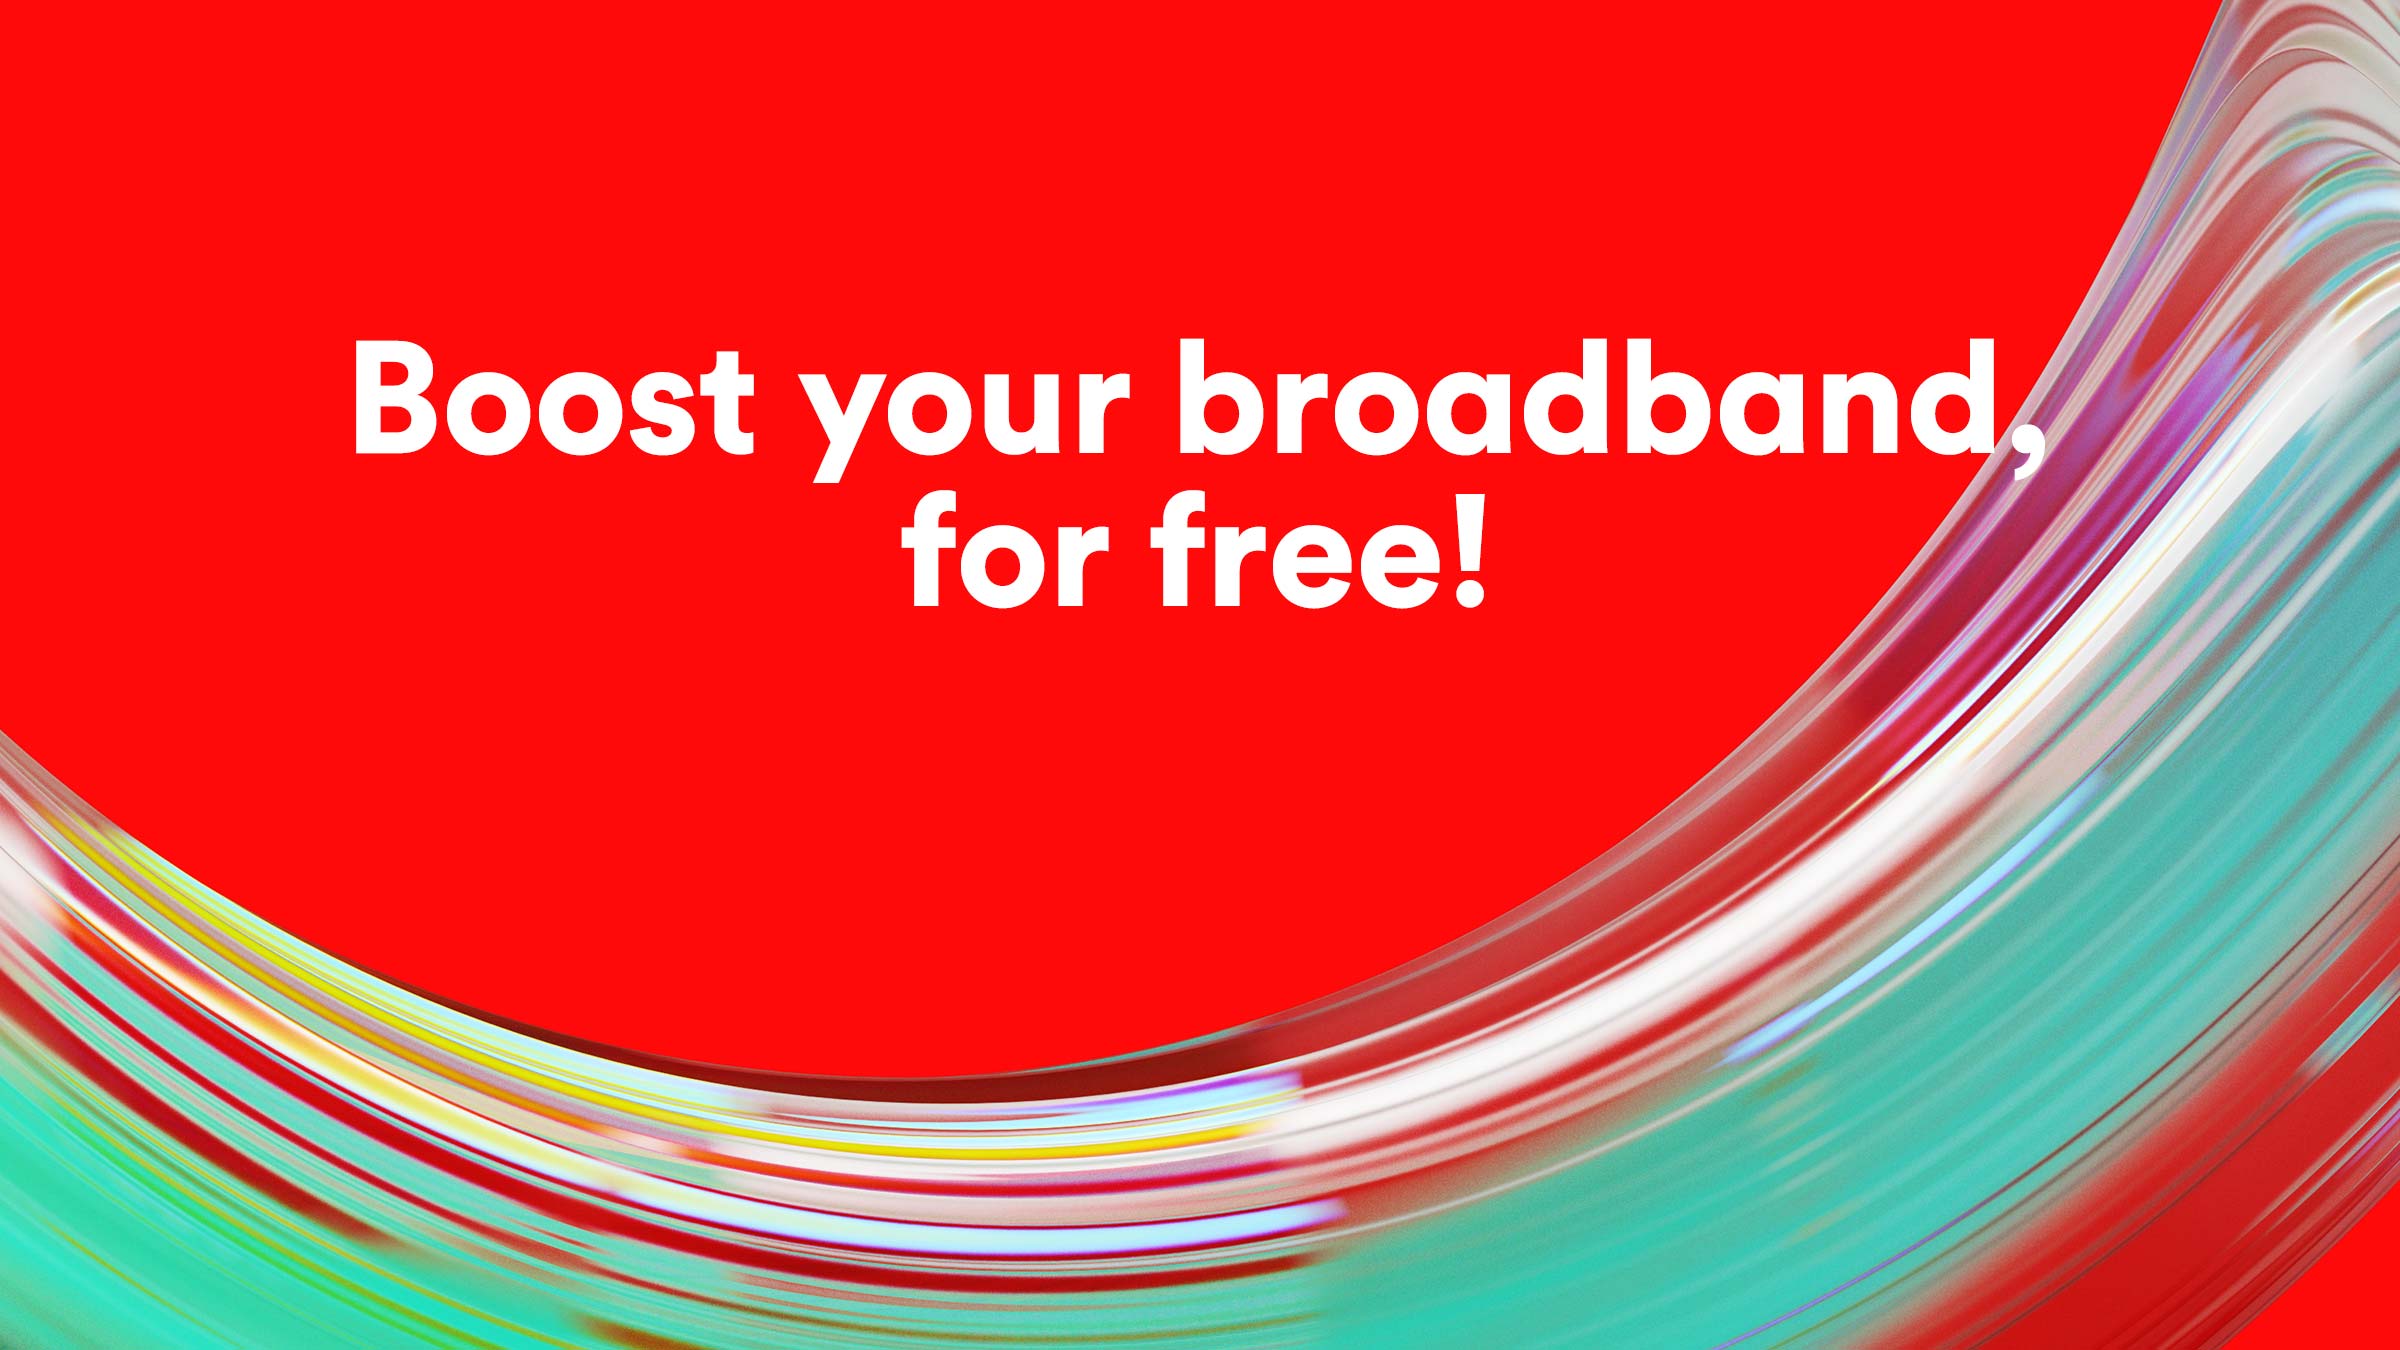 Virgin Media banner "Boost your broadband for free"